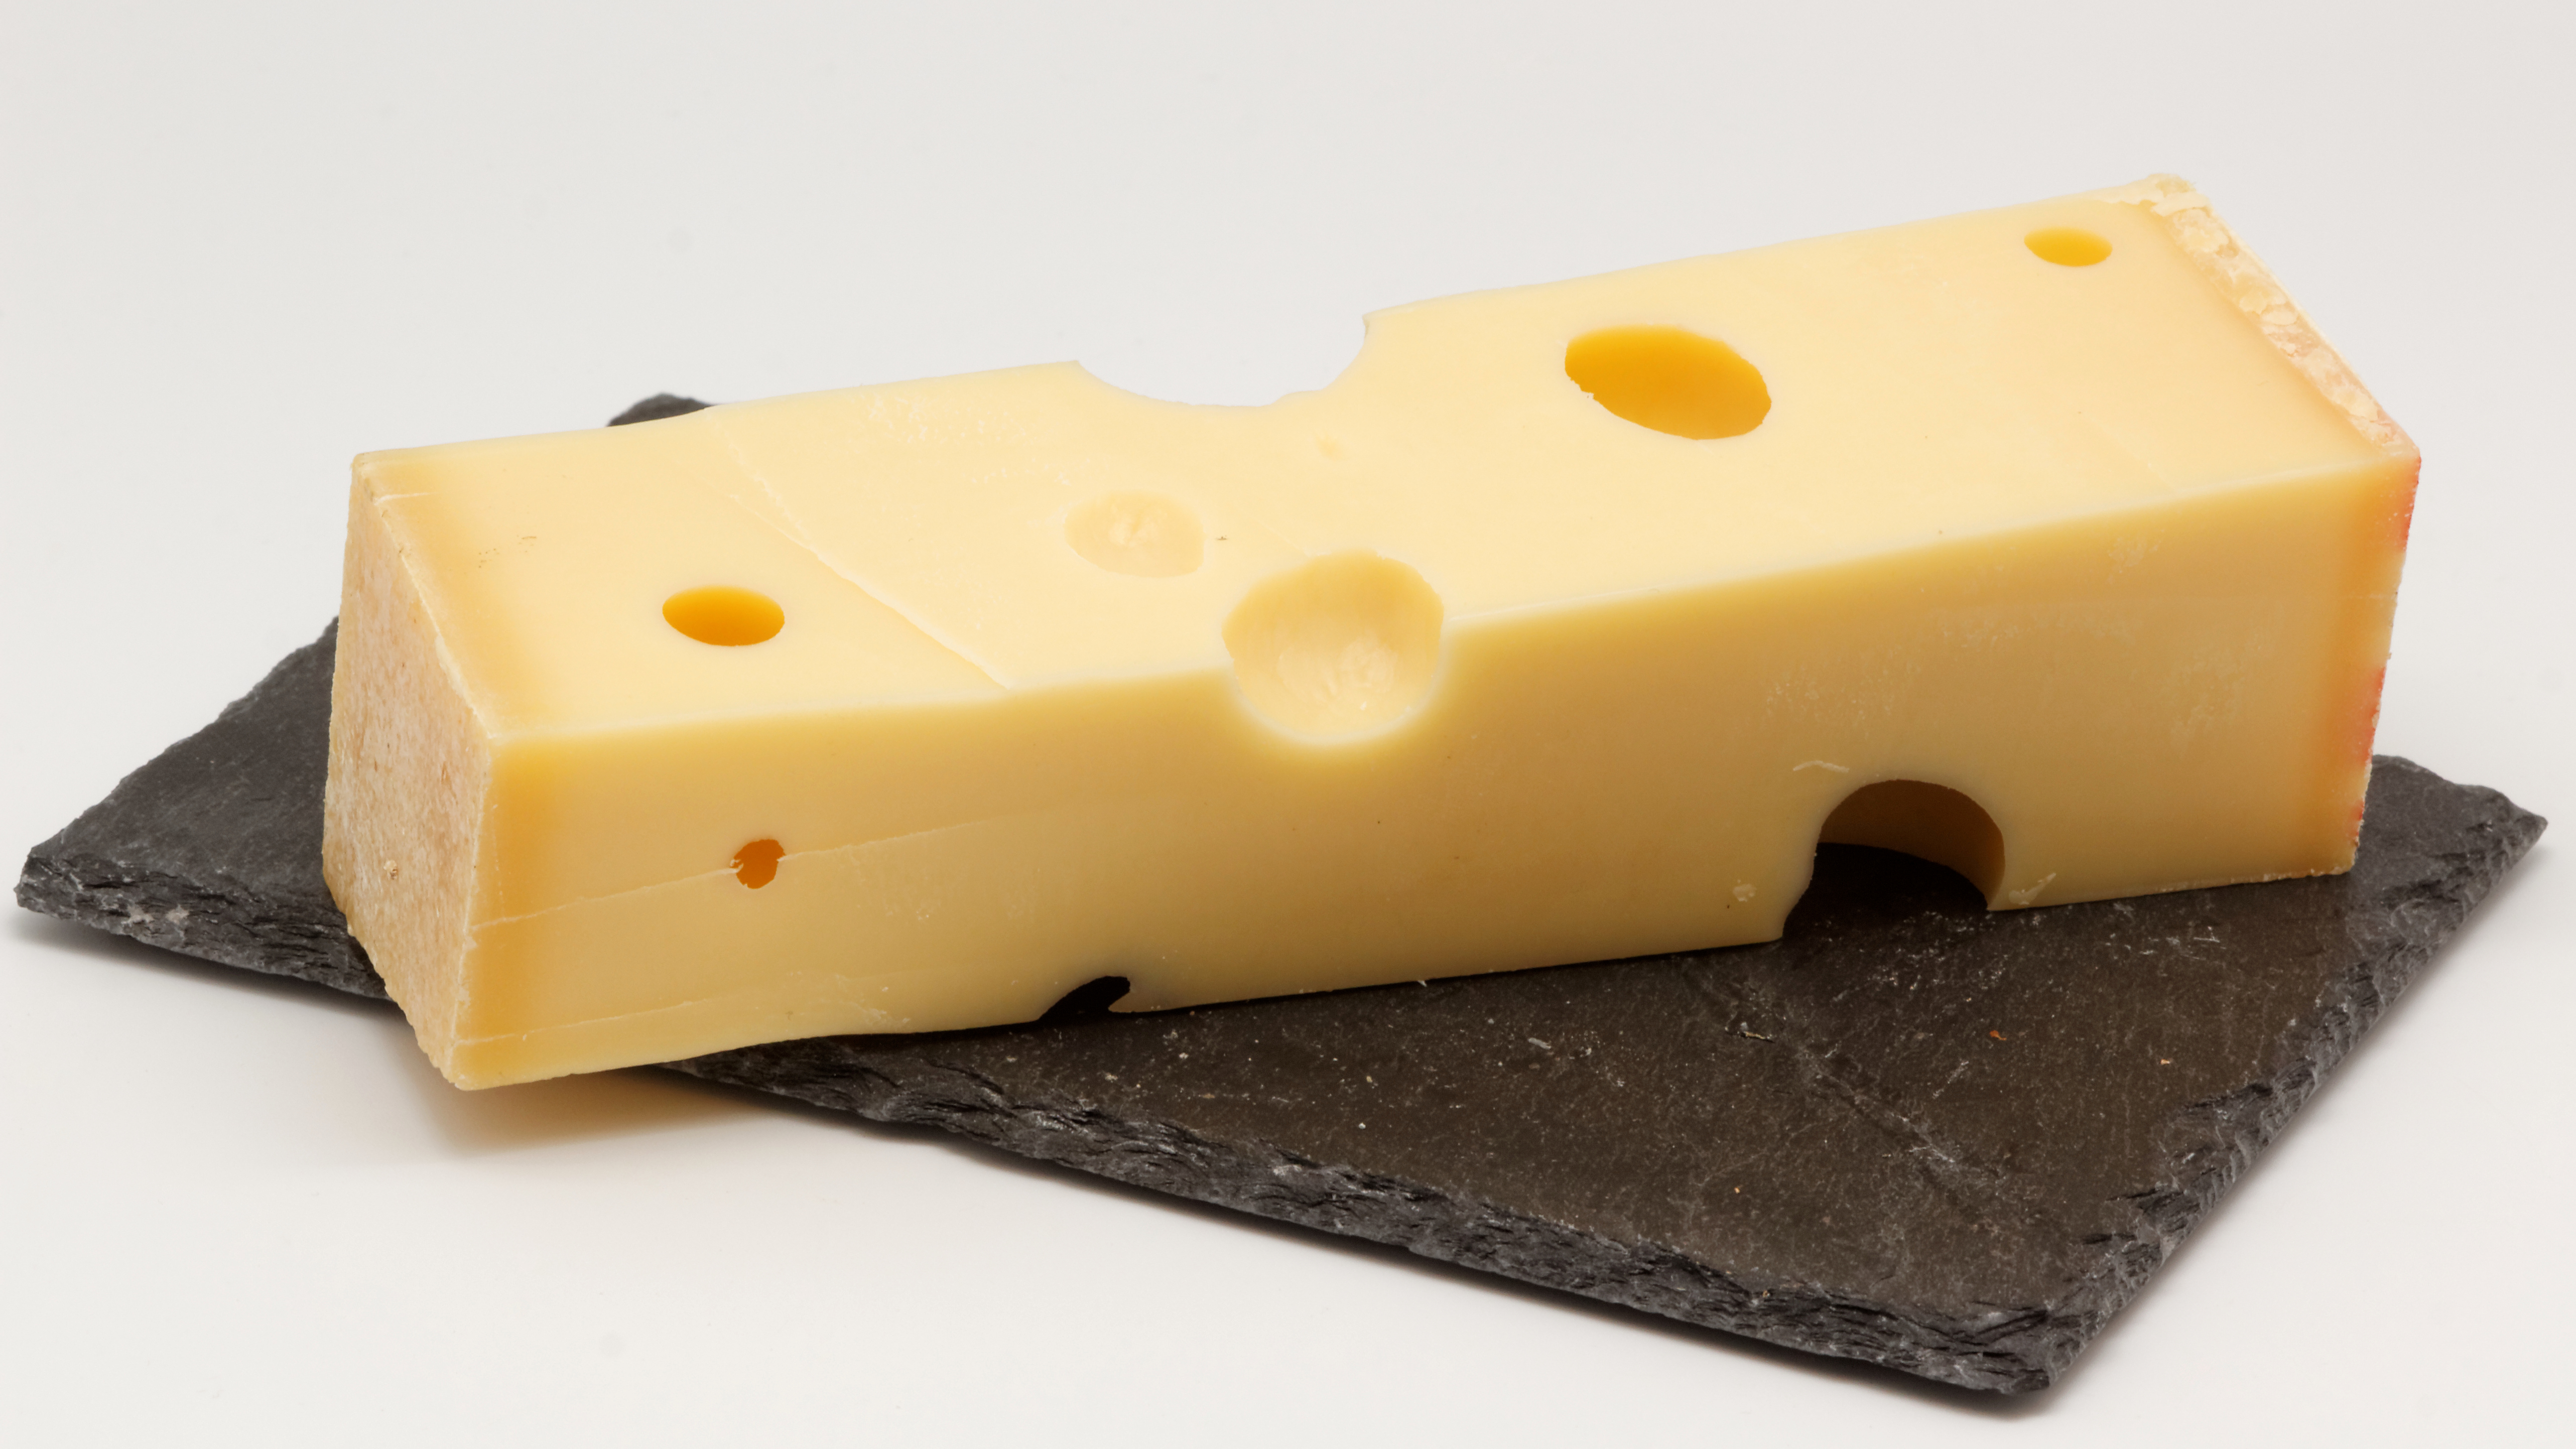 Швейцарский сыр Эмменталь